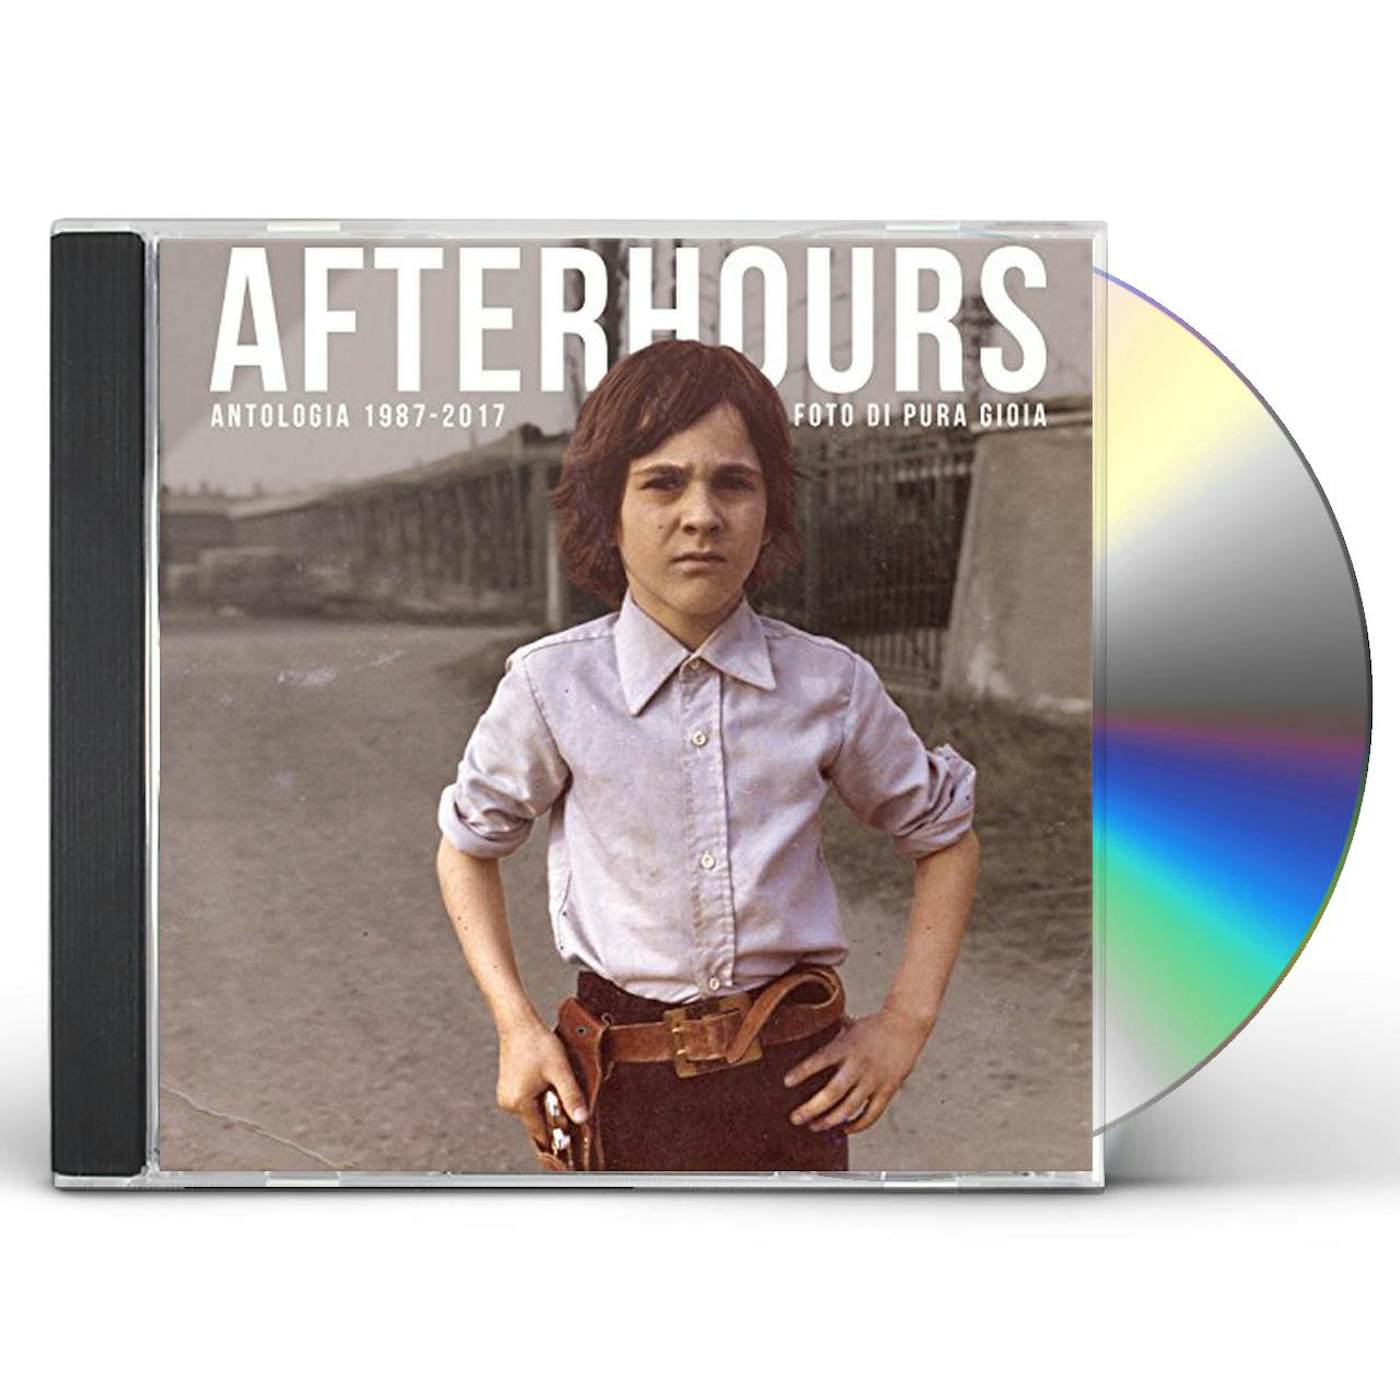 Afterhours FOTO DI PURA GIOIA: ANTOLOGIA 1987-2017 CD